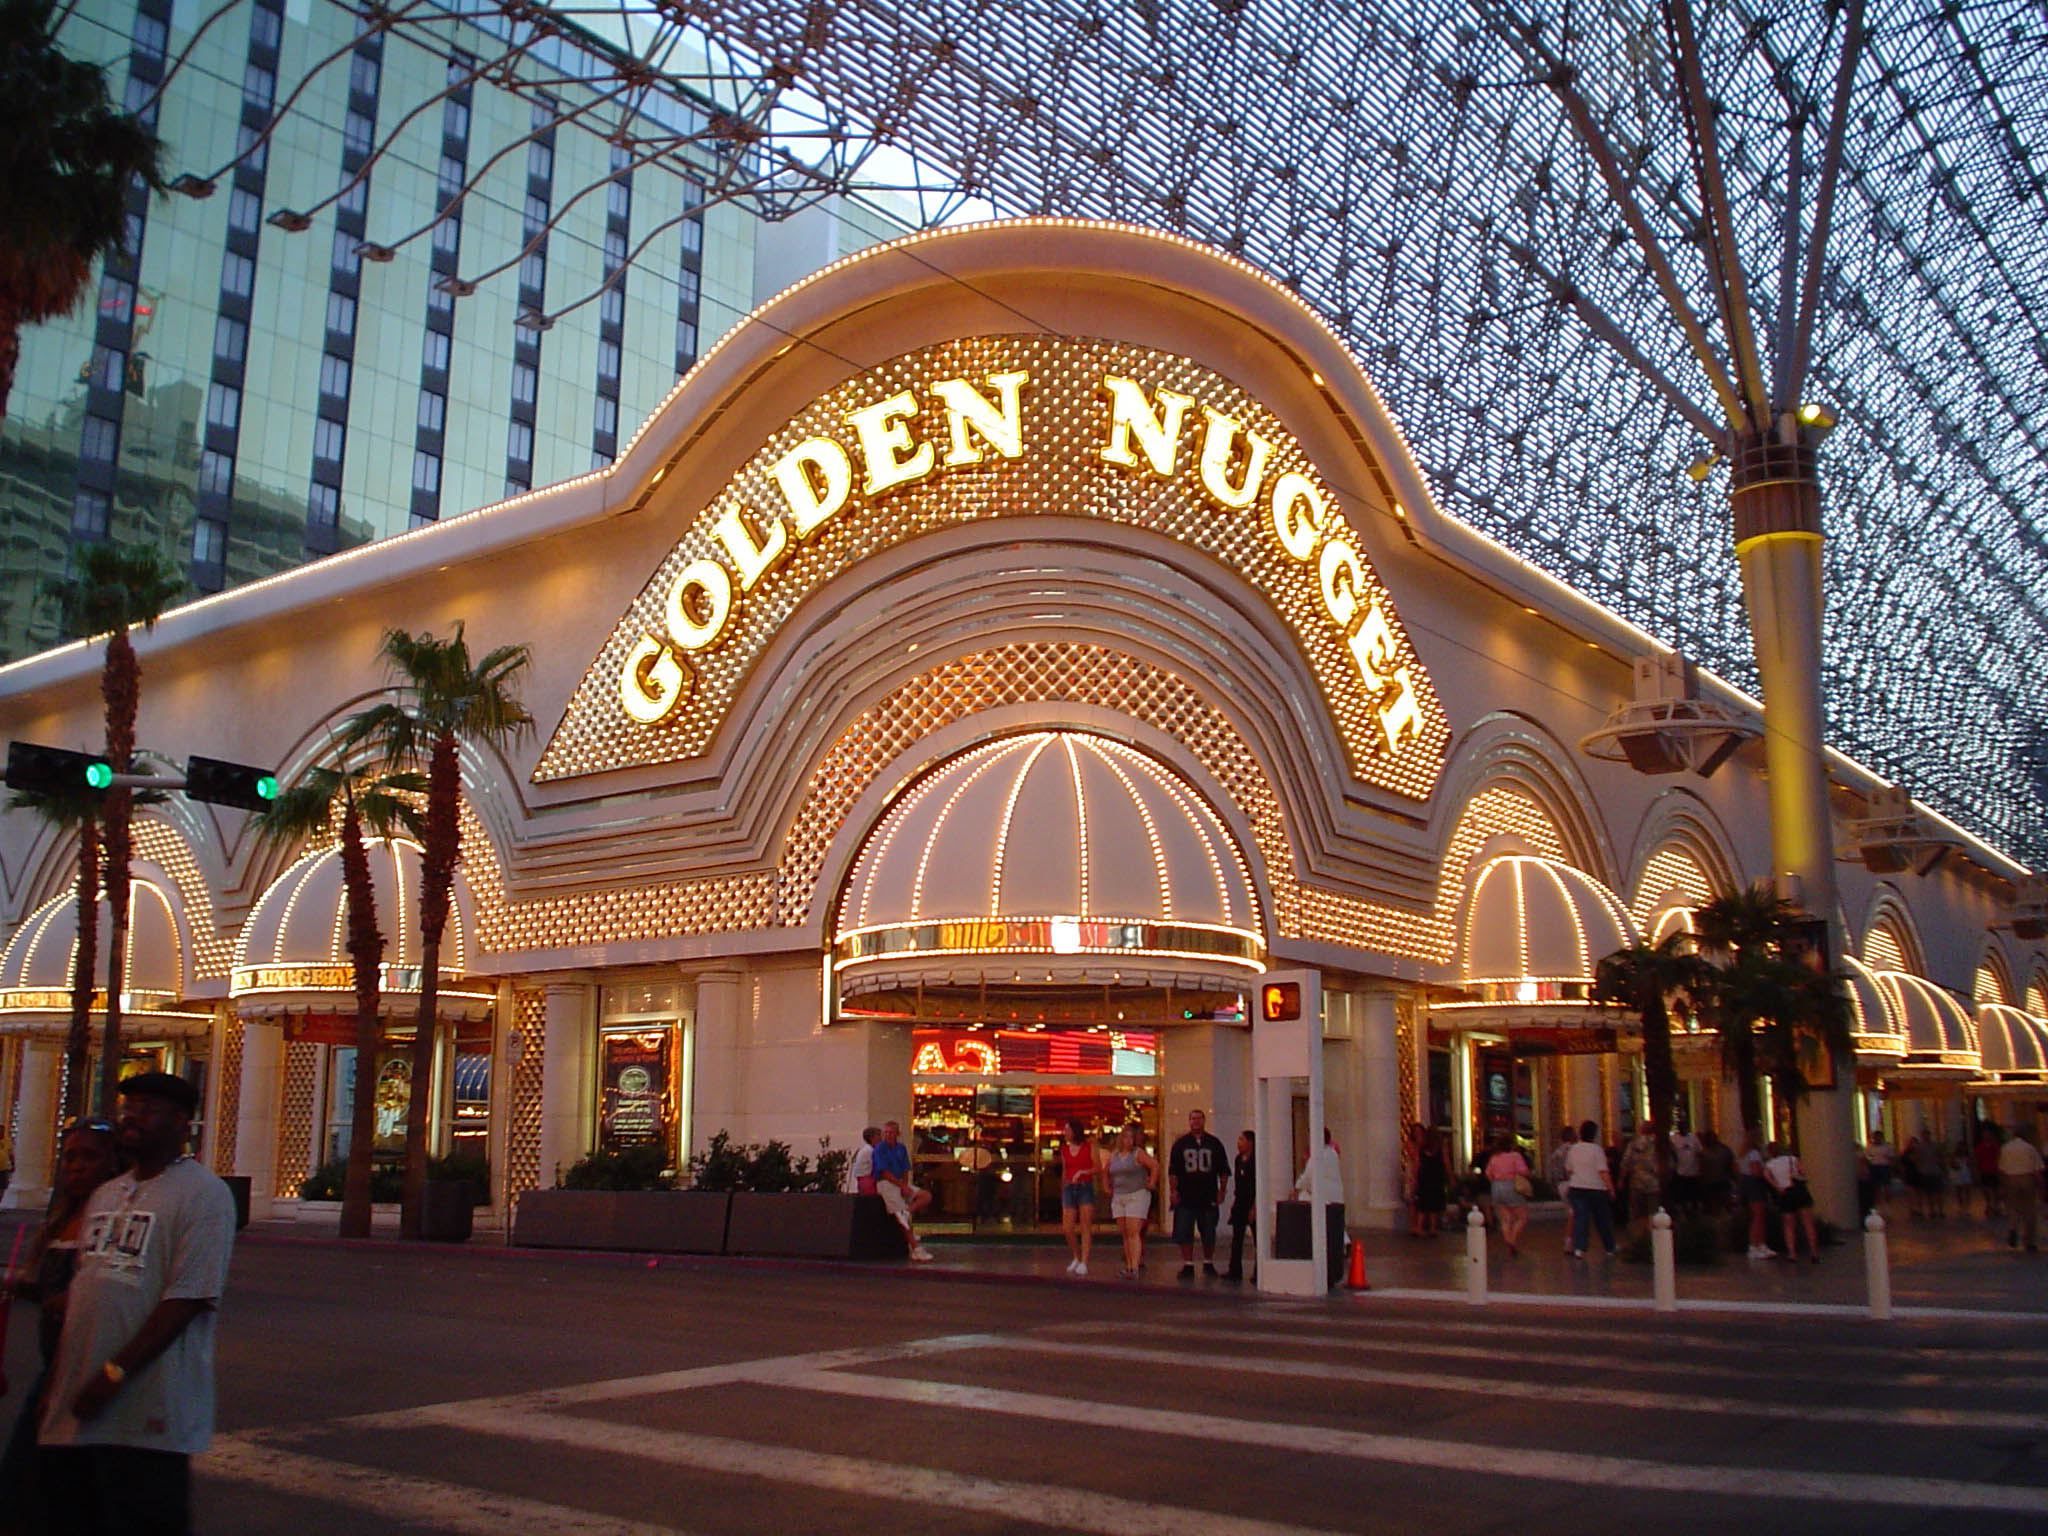 Casino Golden Nugget